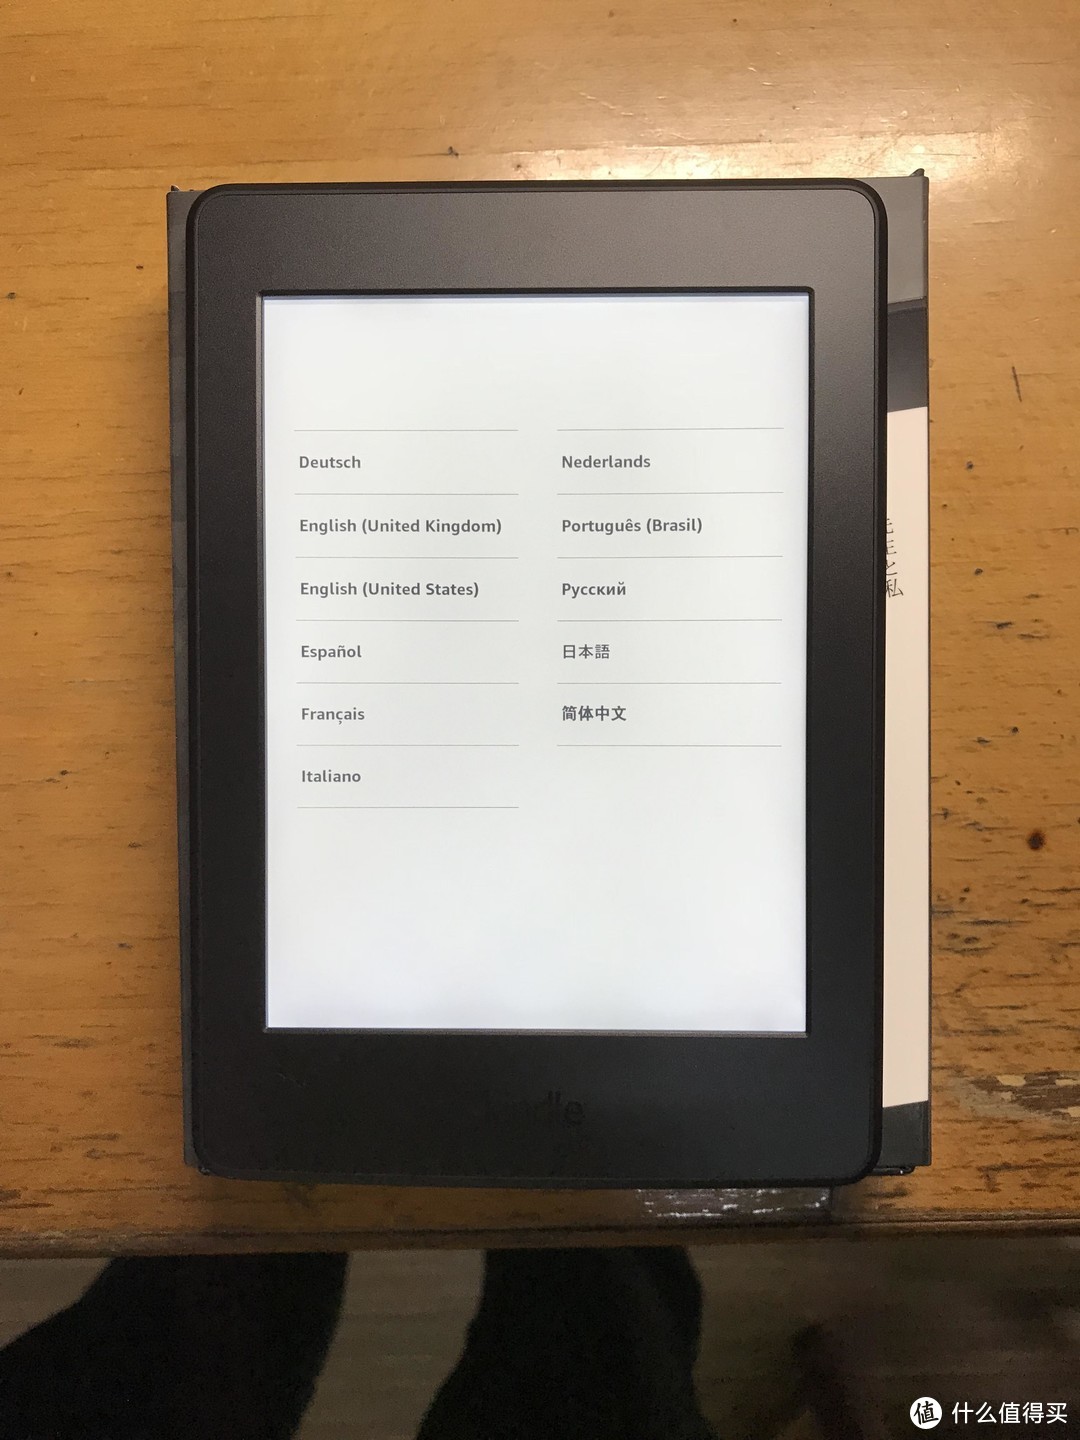 日亚Amazon 亚马逊 Kindle Paperwhite 3 电子书阅读器 开箱